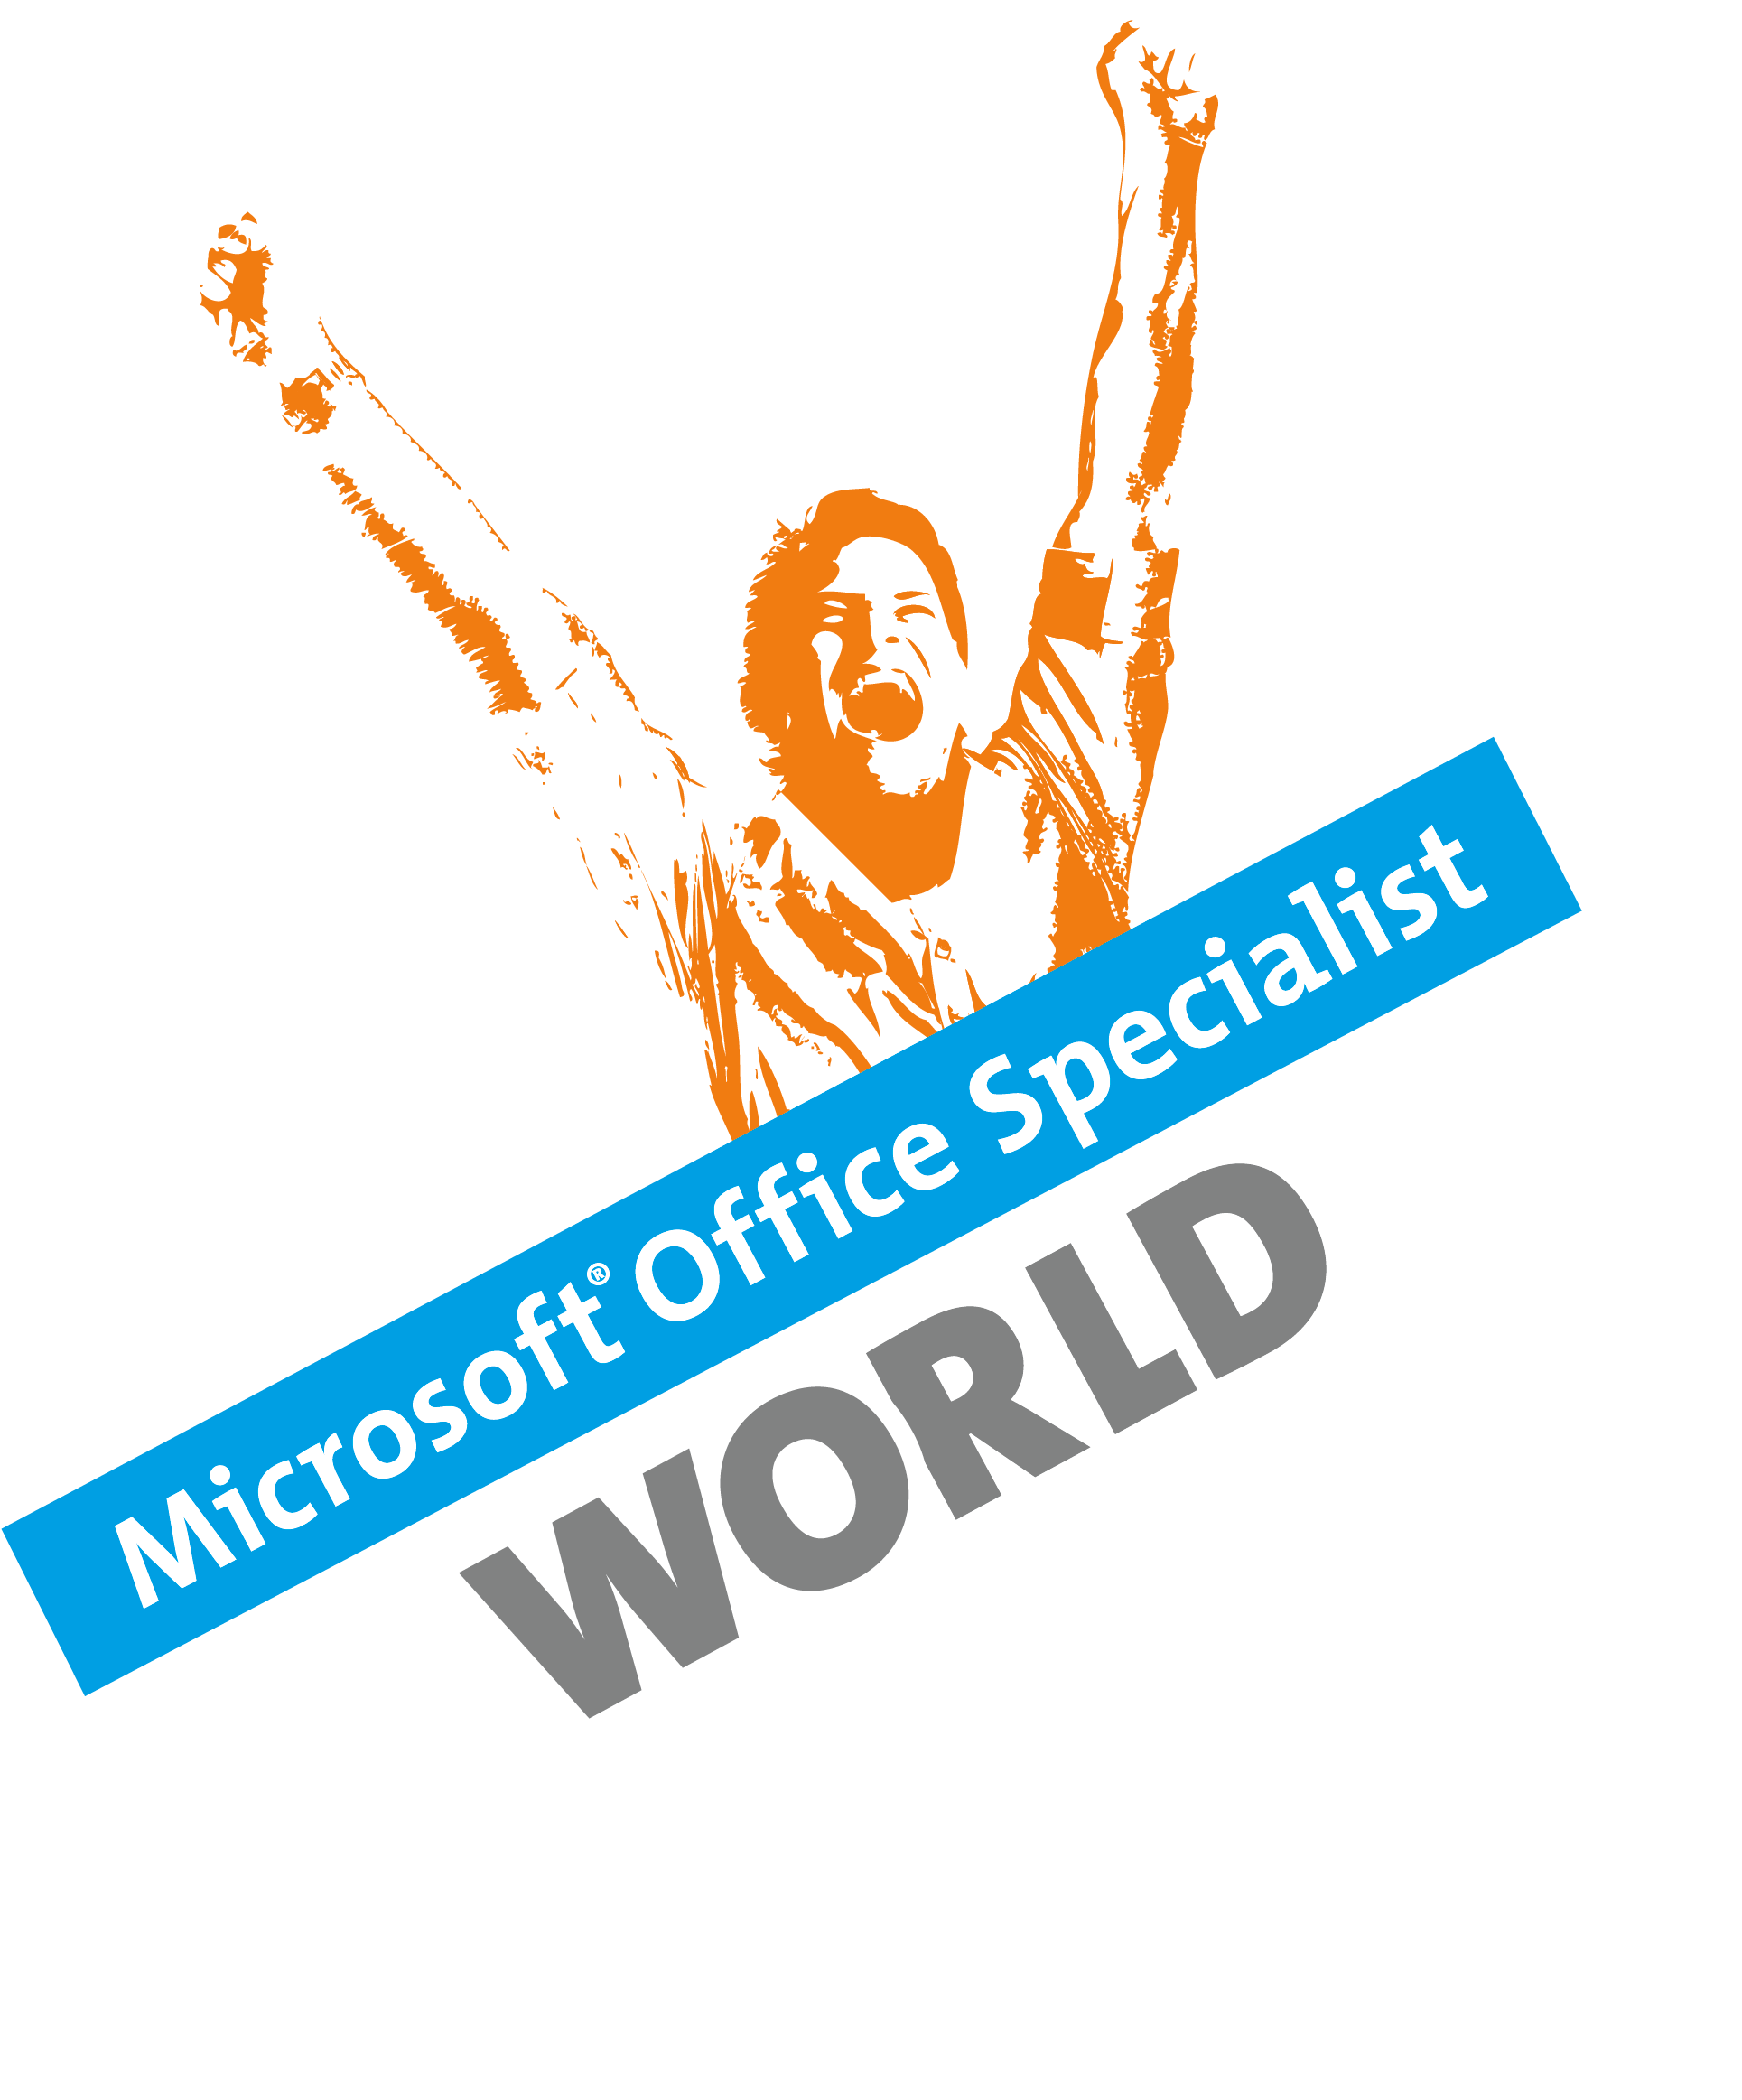 Microsoft Office Specialist World Championship - Microsoft Office Specialist World Championship 2017 (2400x2400)